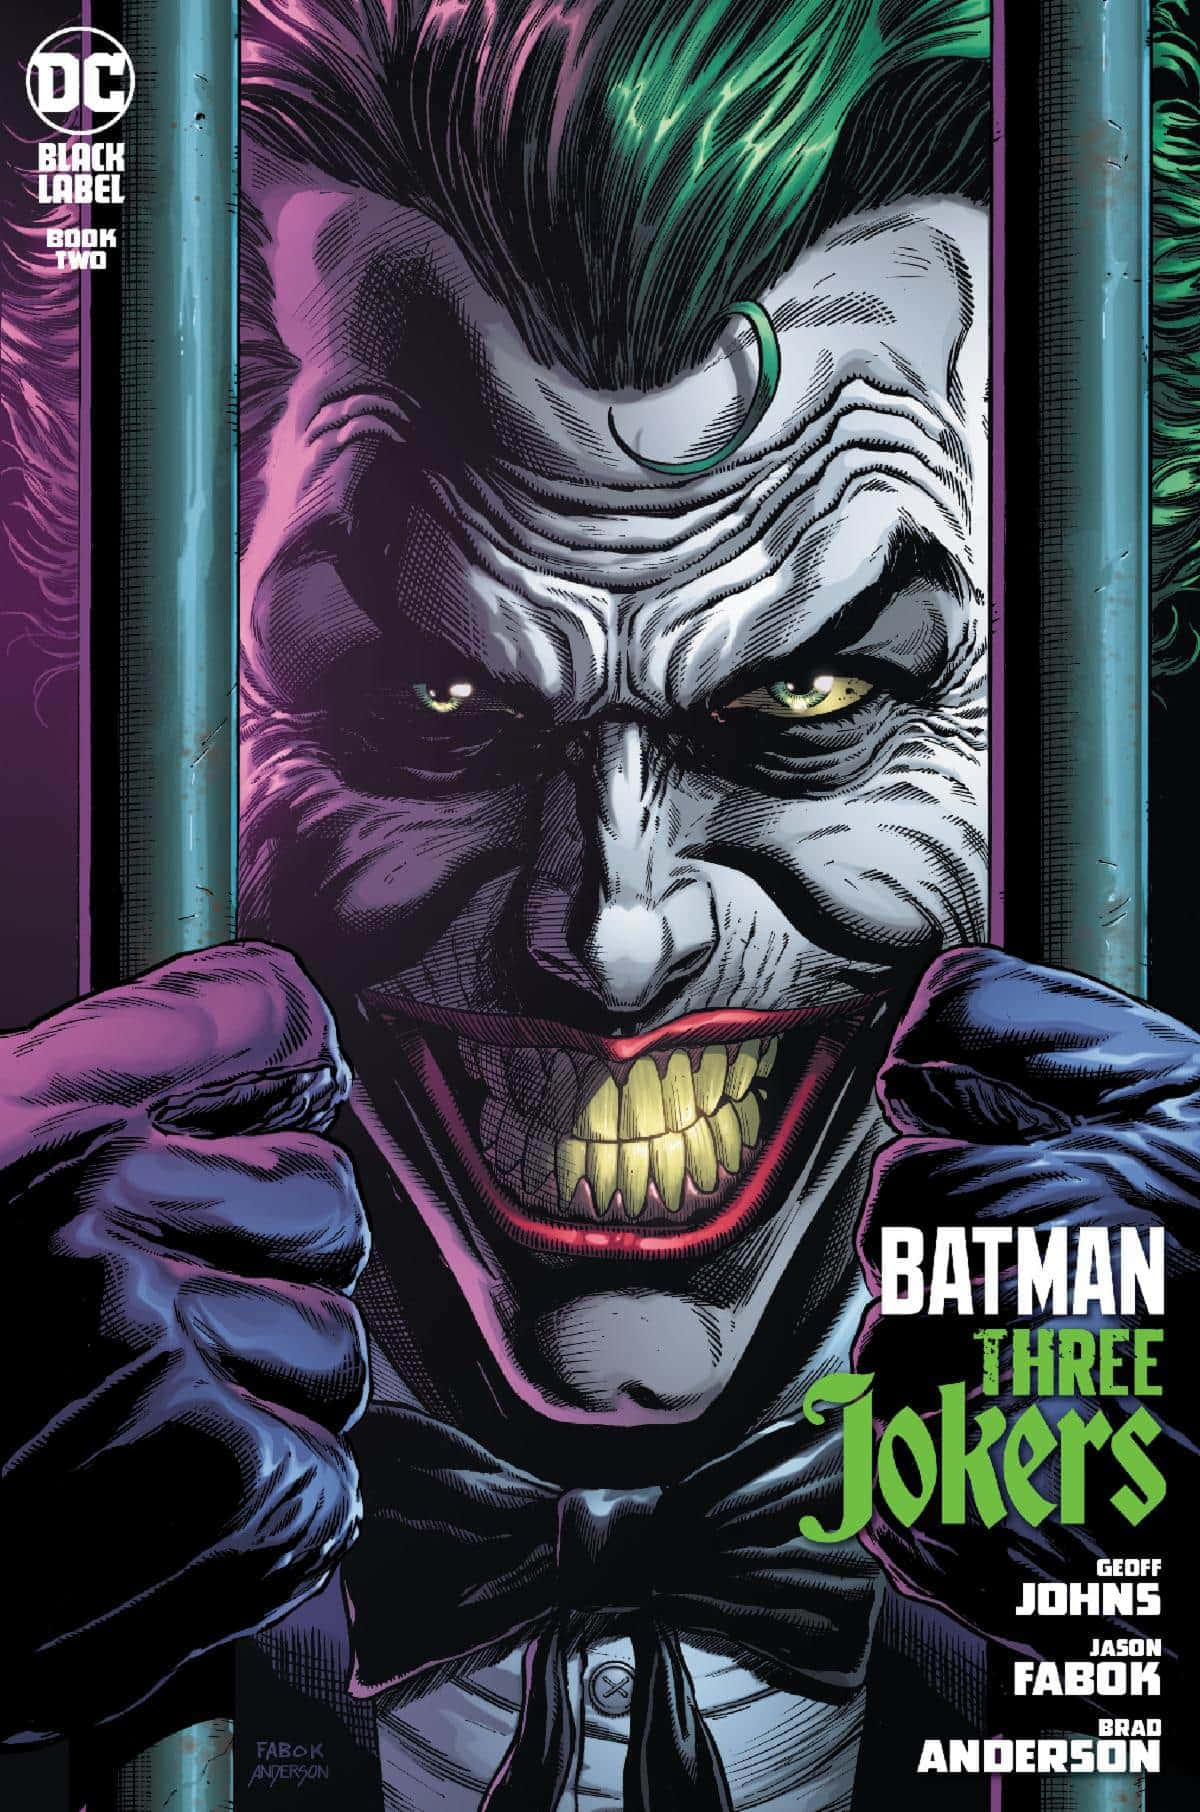 Batman faces off against the Three Jokers Wallpaper